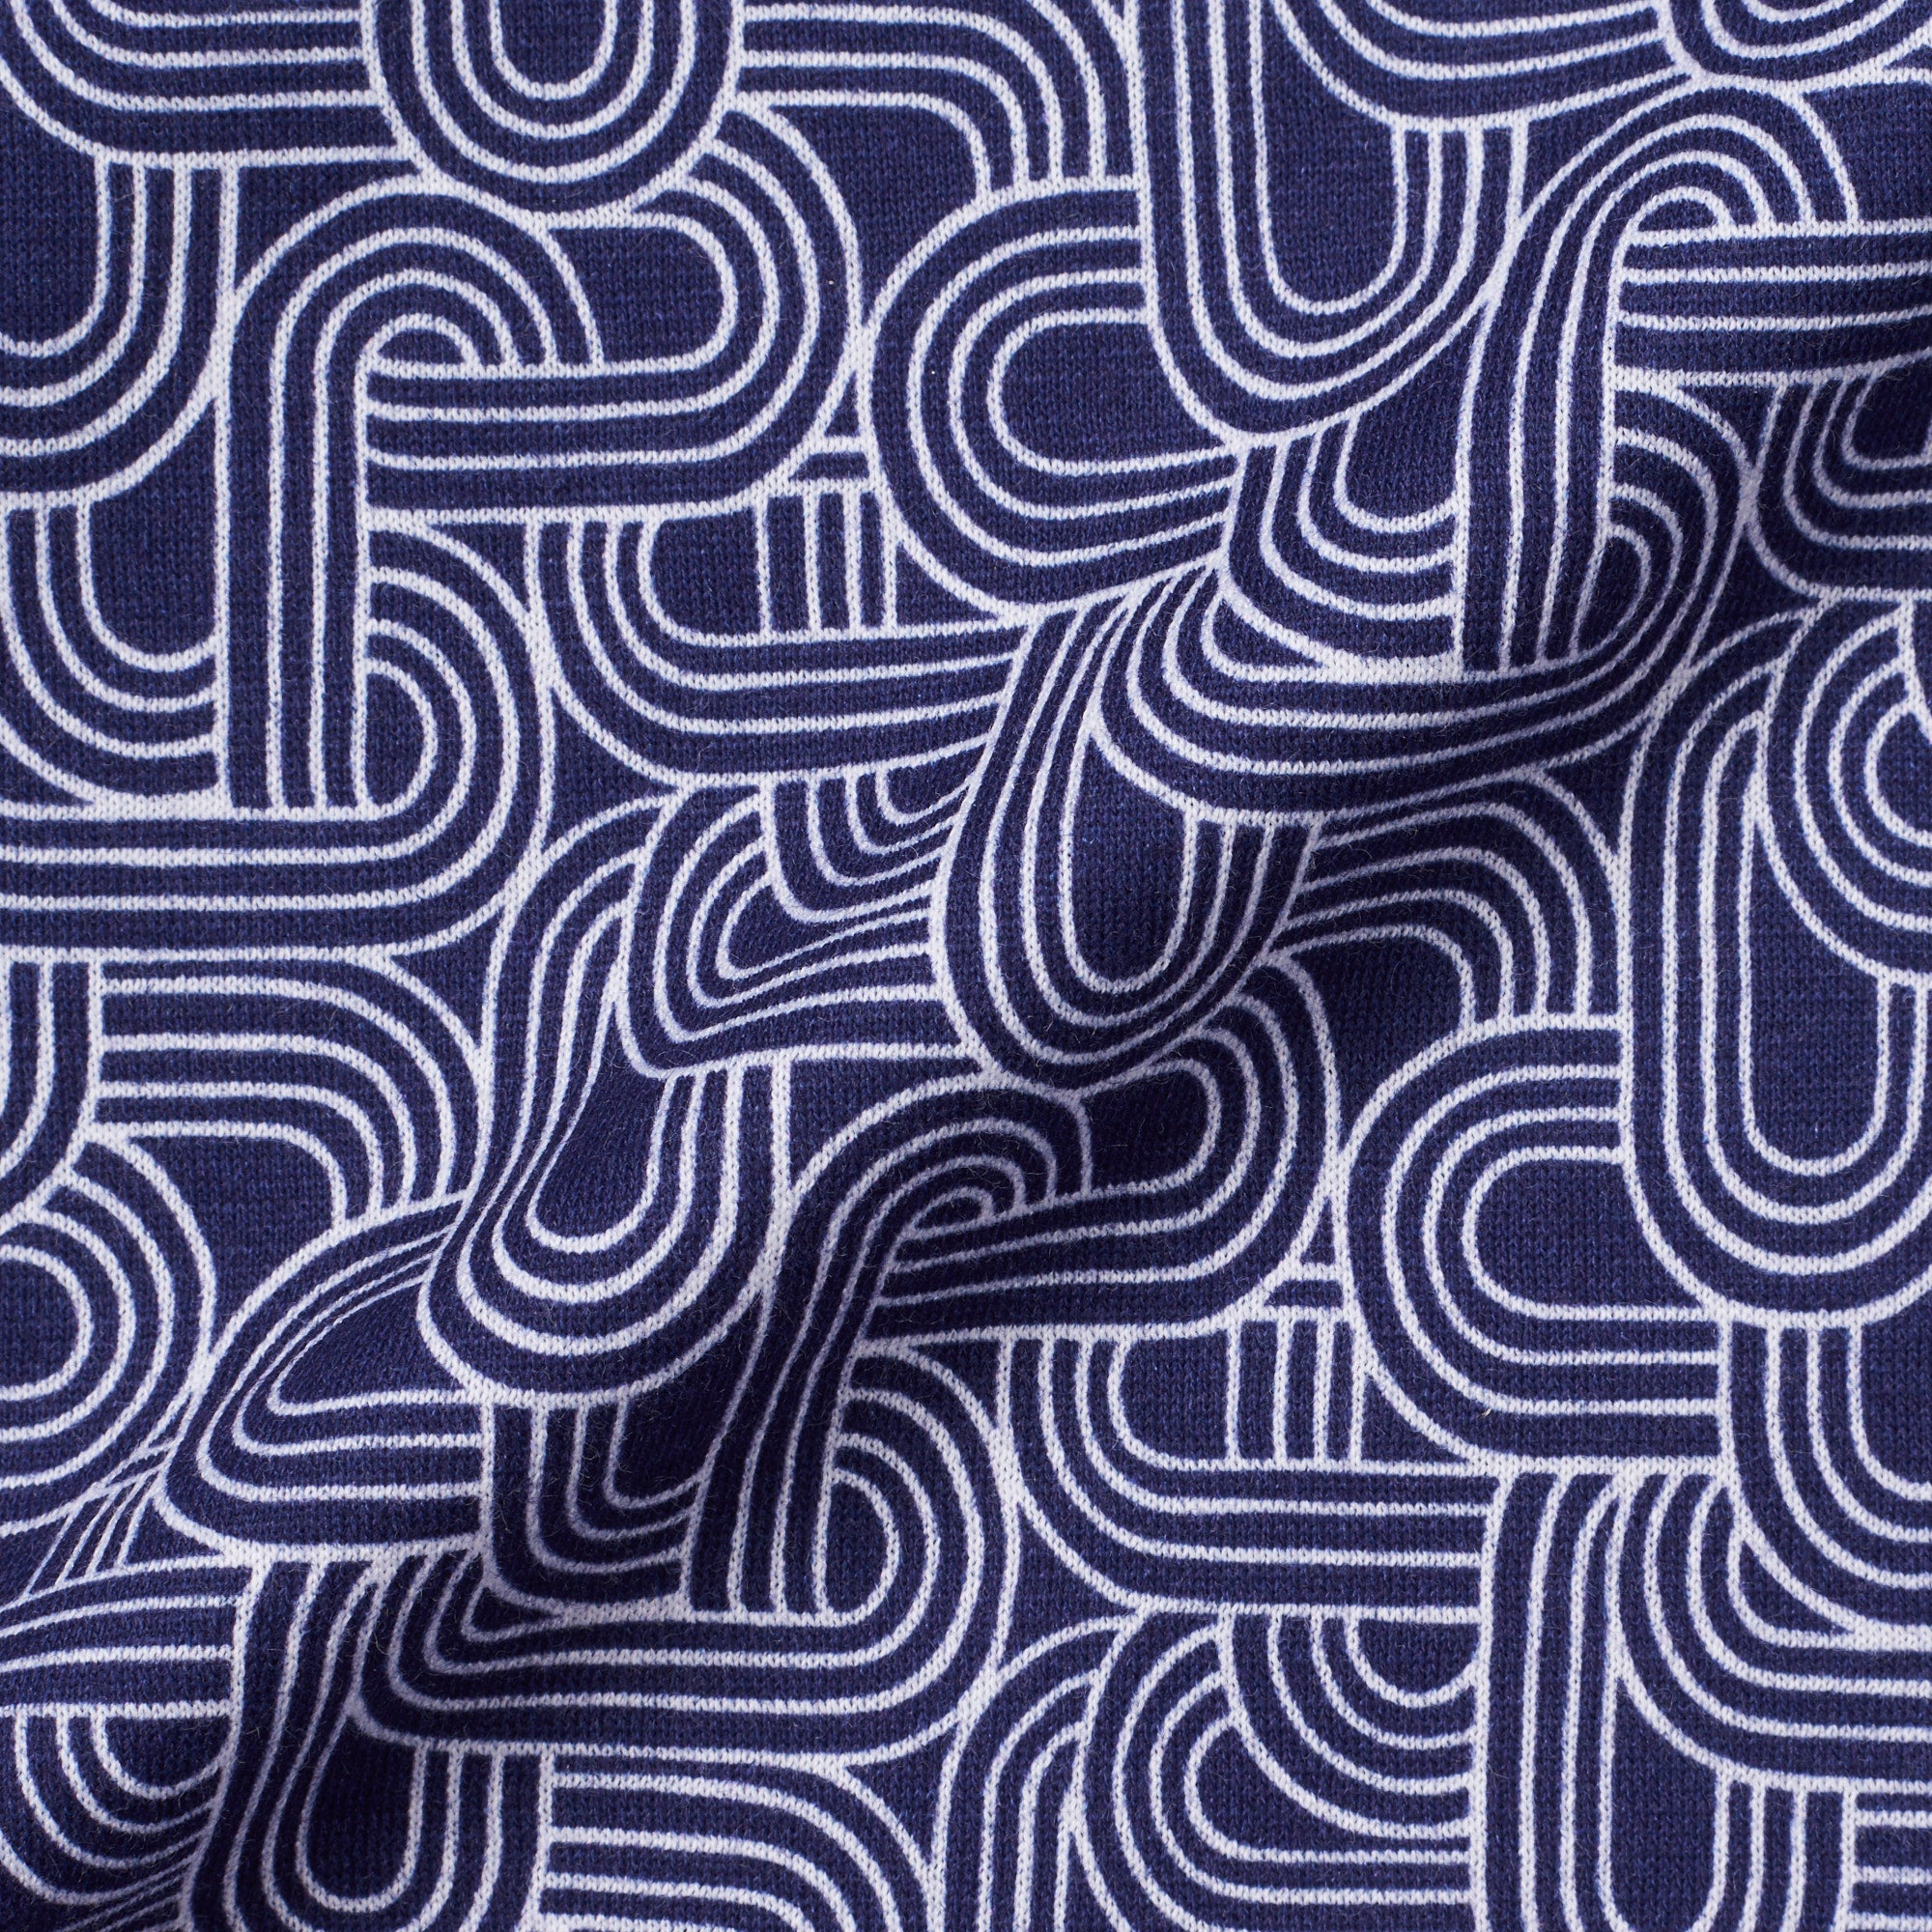 SARTORIO Napoli by KITON Navy Blue Geometric Cotton Short Sleeve Casual Shirt NEW SARTORIO